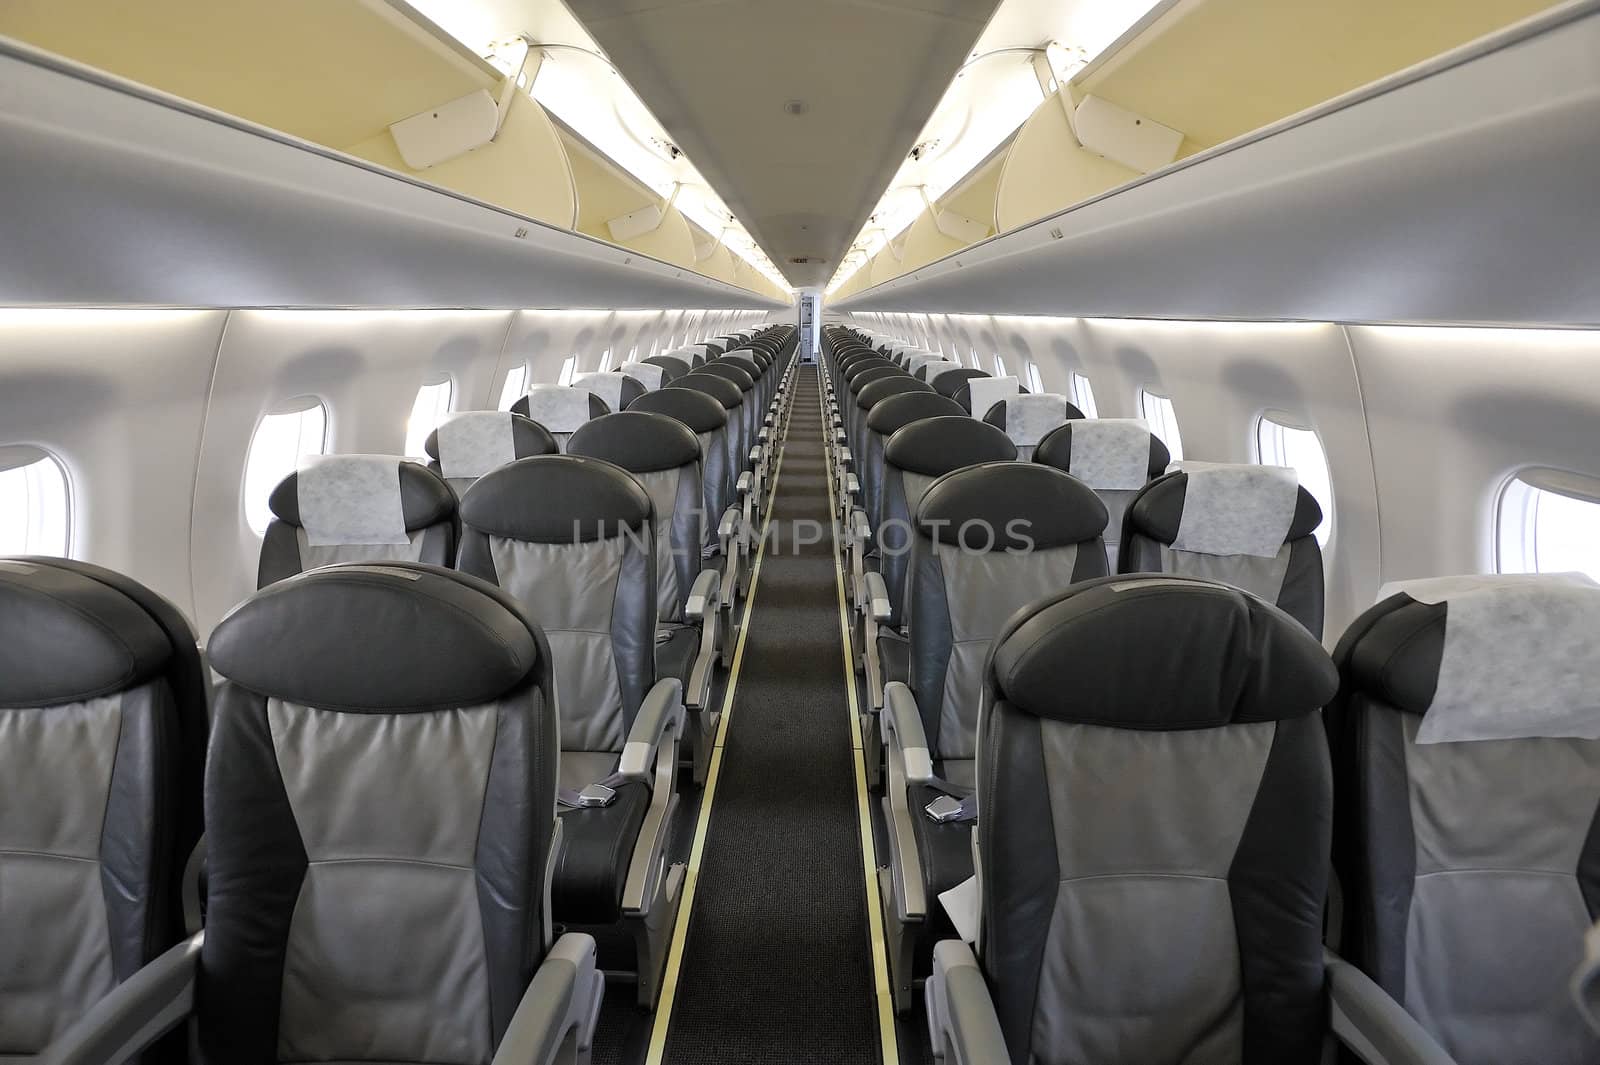 Photo of empty passenger airplane